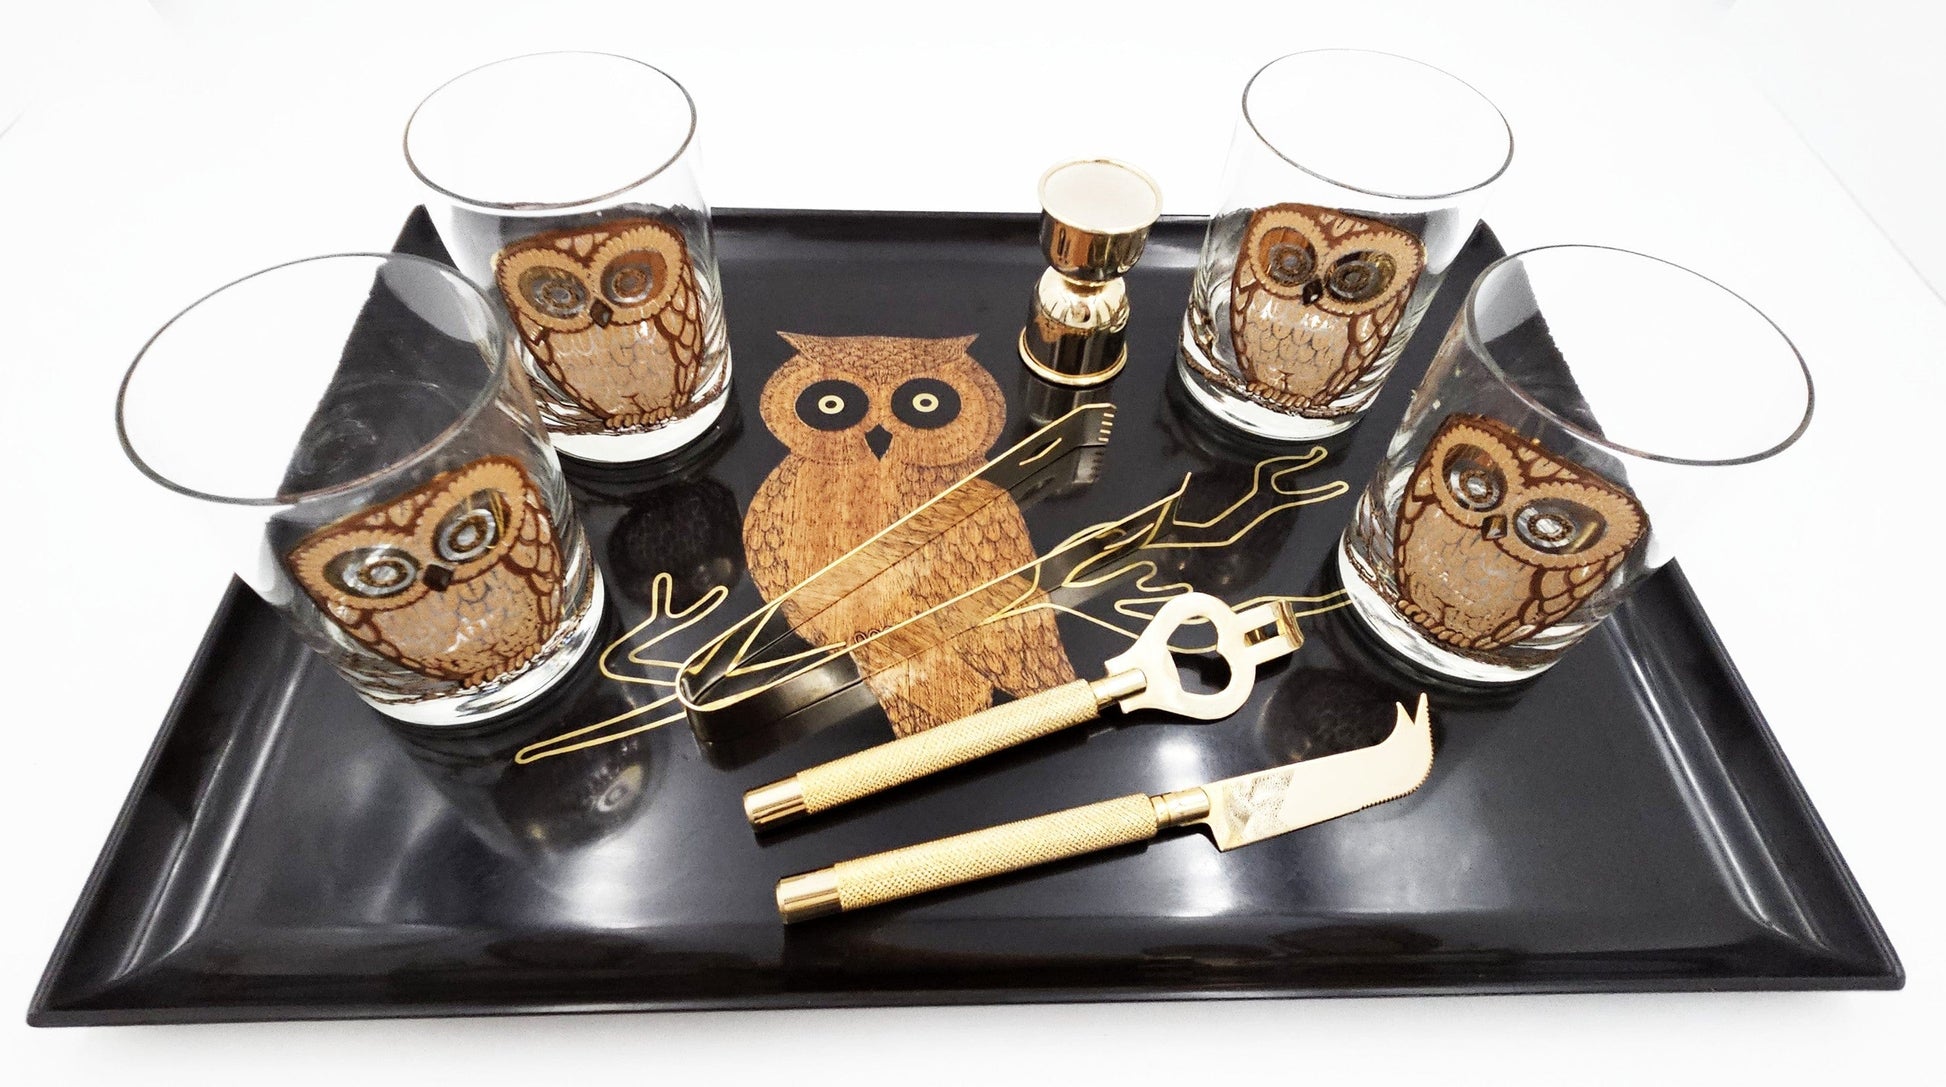 Georges Briard Serveware Georges Briard 22k Gold DOF Owl Glassware Set w/ Couroc Owl Tray Circa 1960's